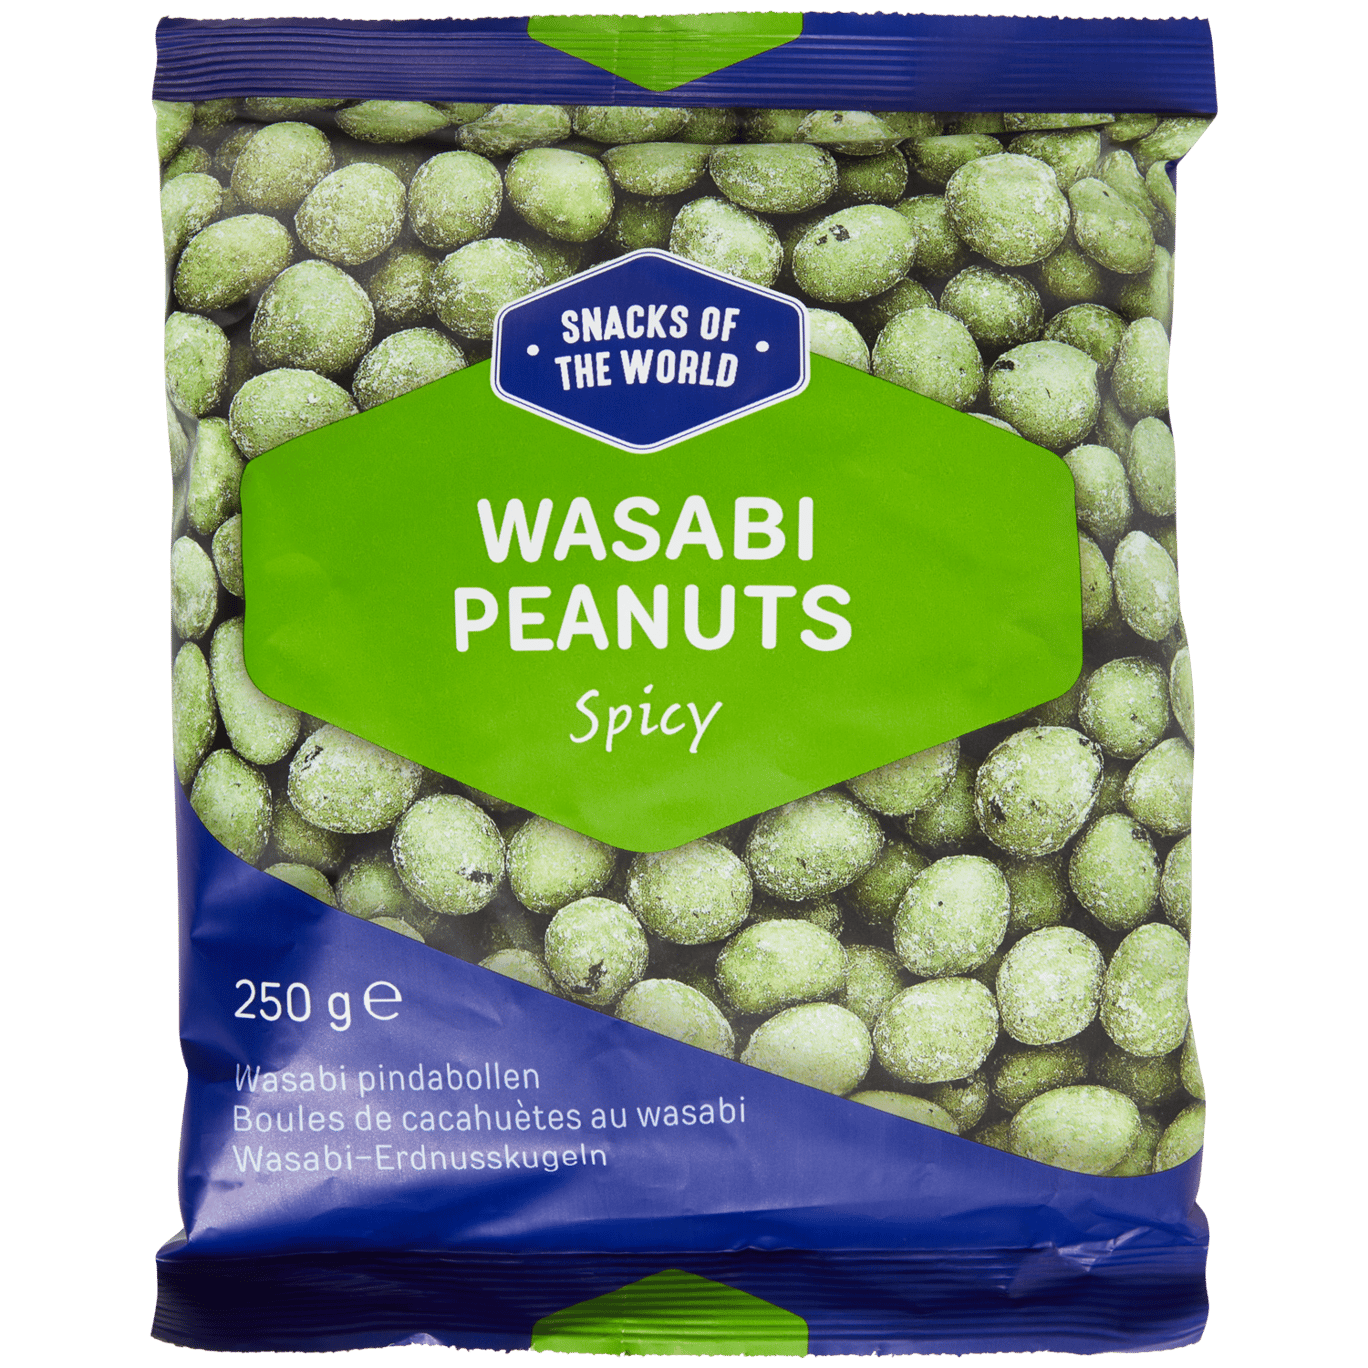 Wasabi arašidy Snacks of the World Pikantné